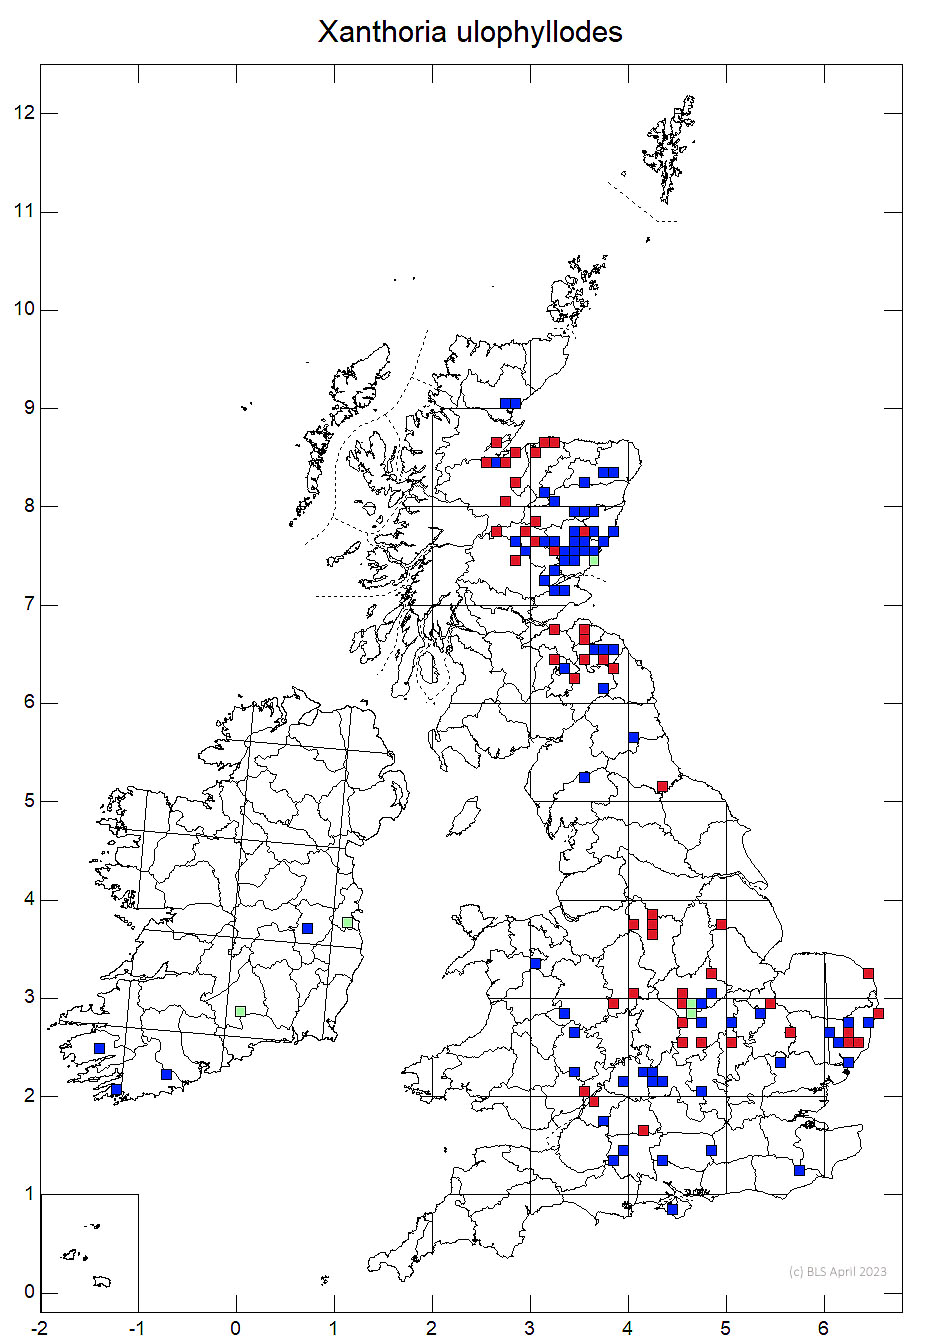 Xanthoria ulophyllodes 10km sq distribution map